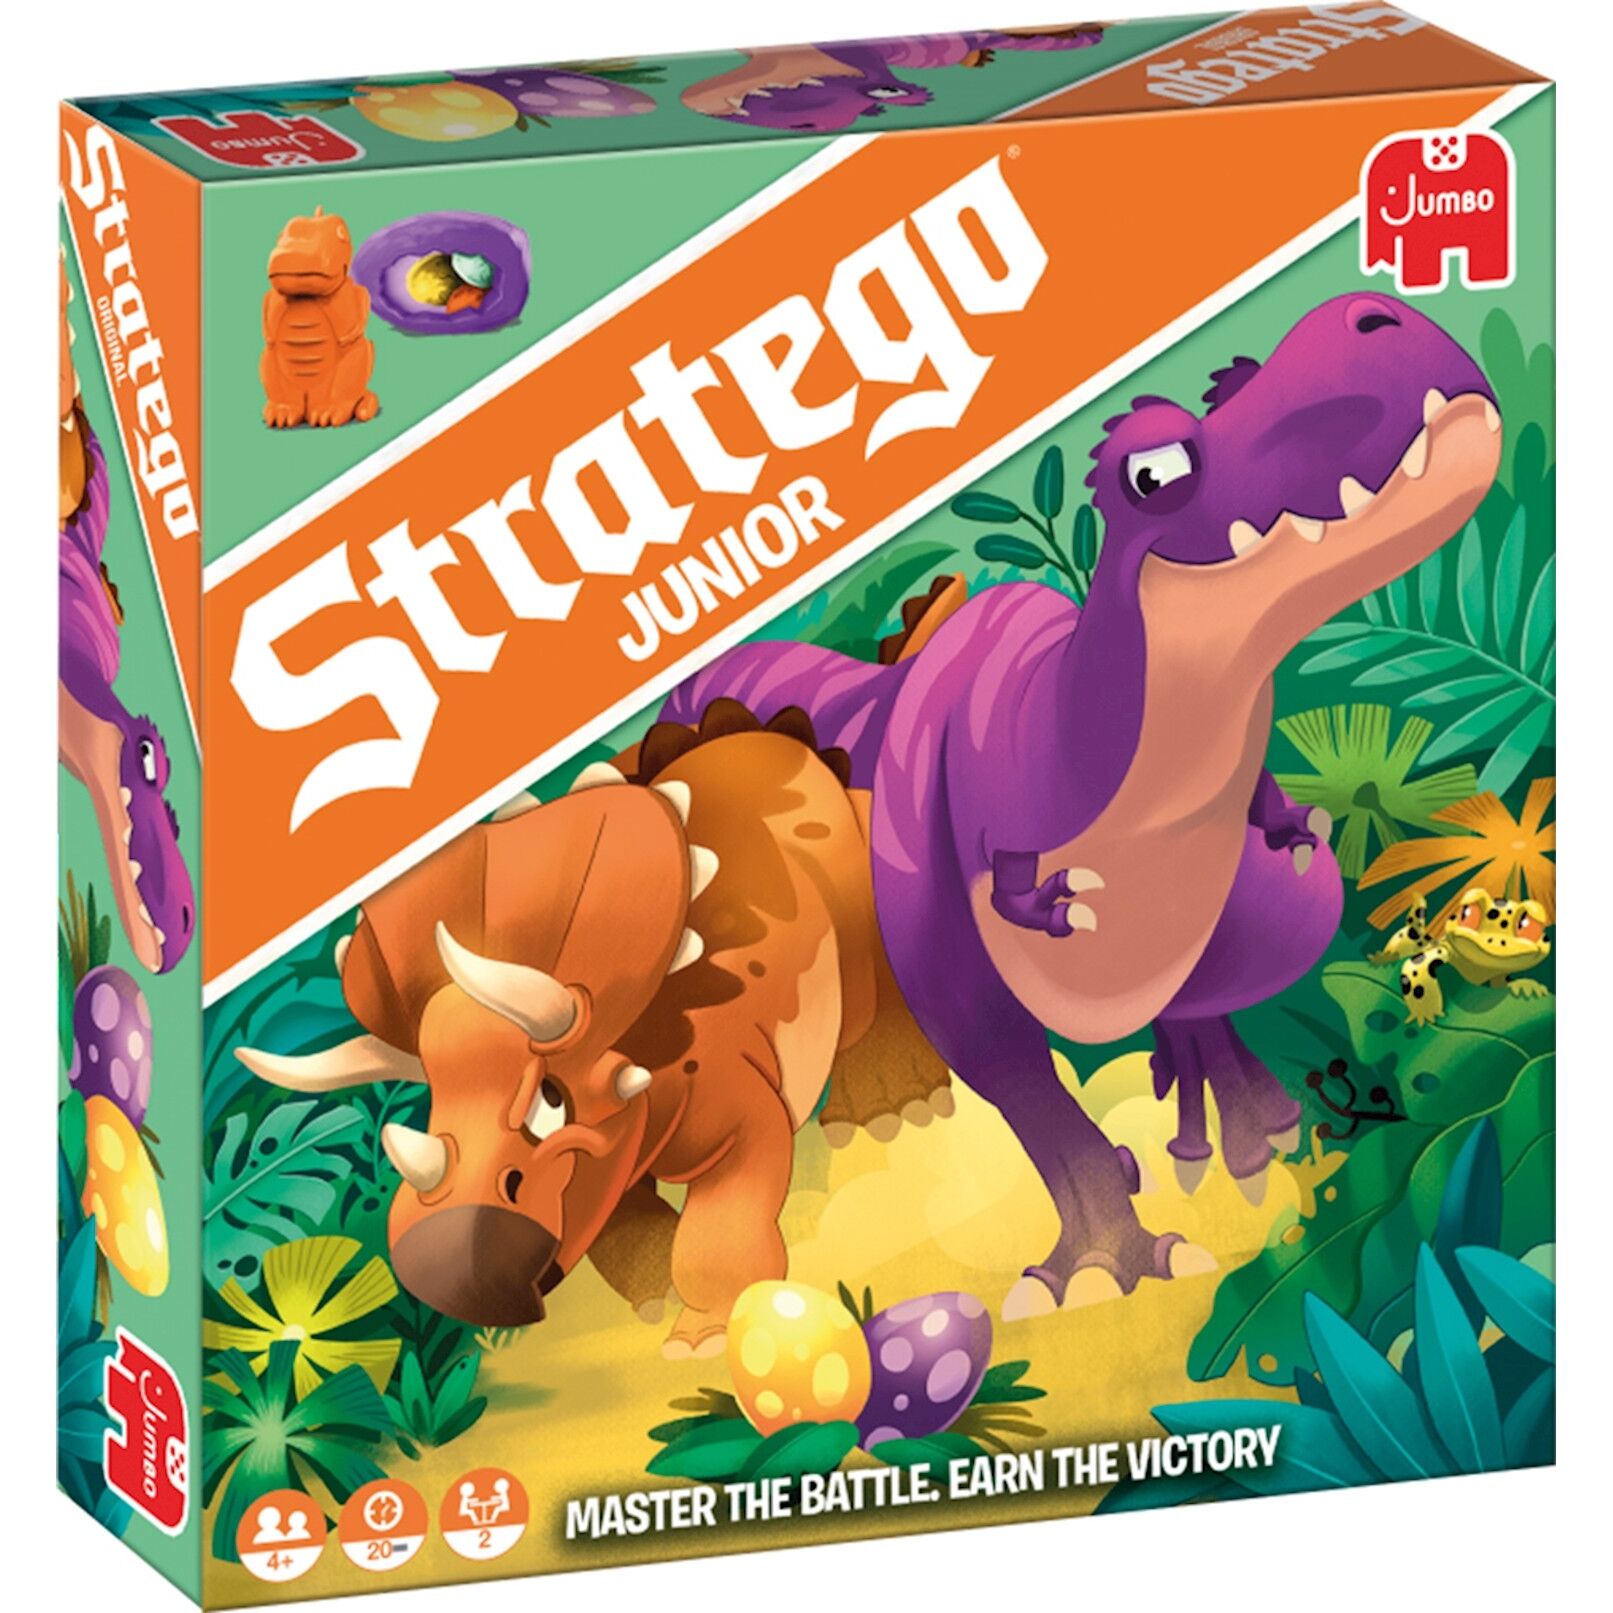 Jeux Stratego Junior Dinos (mult) JUMBO